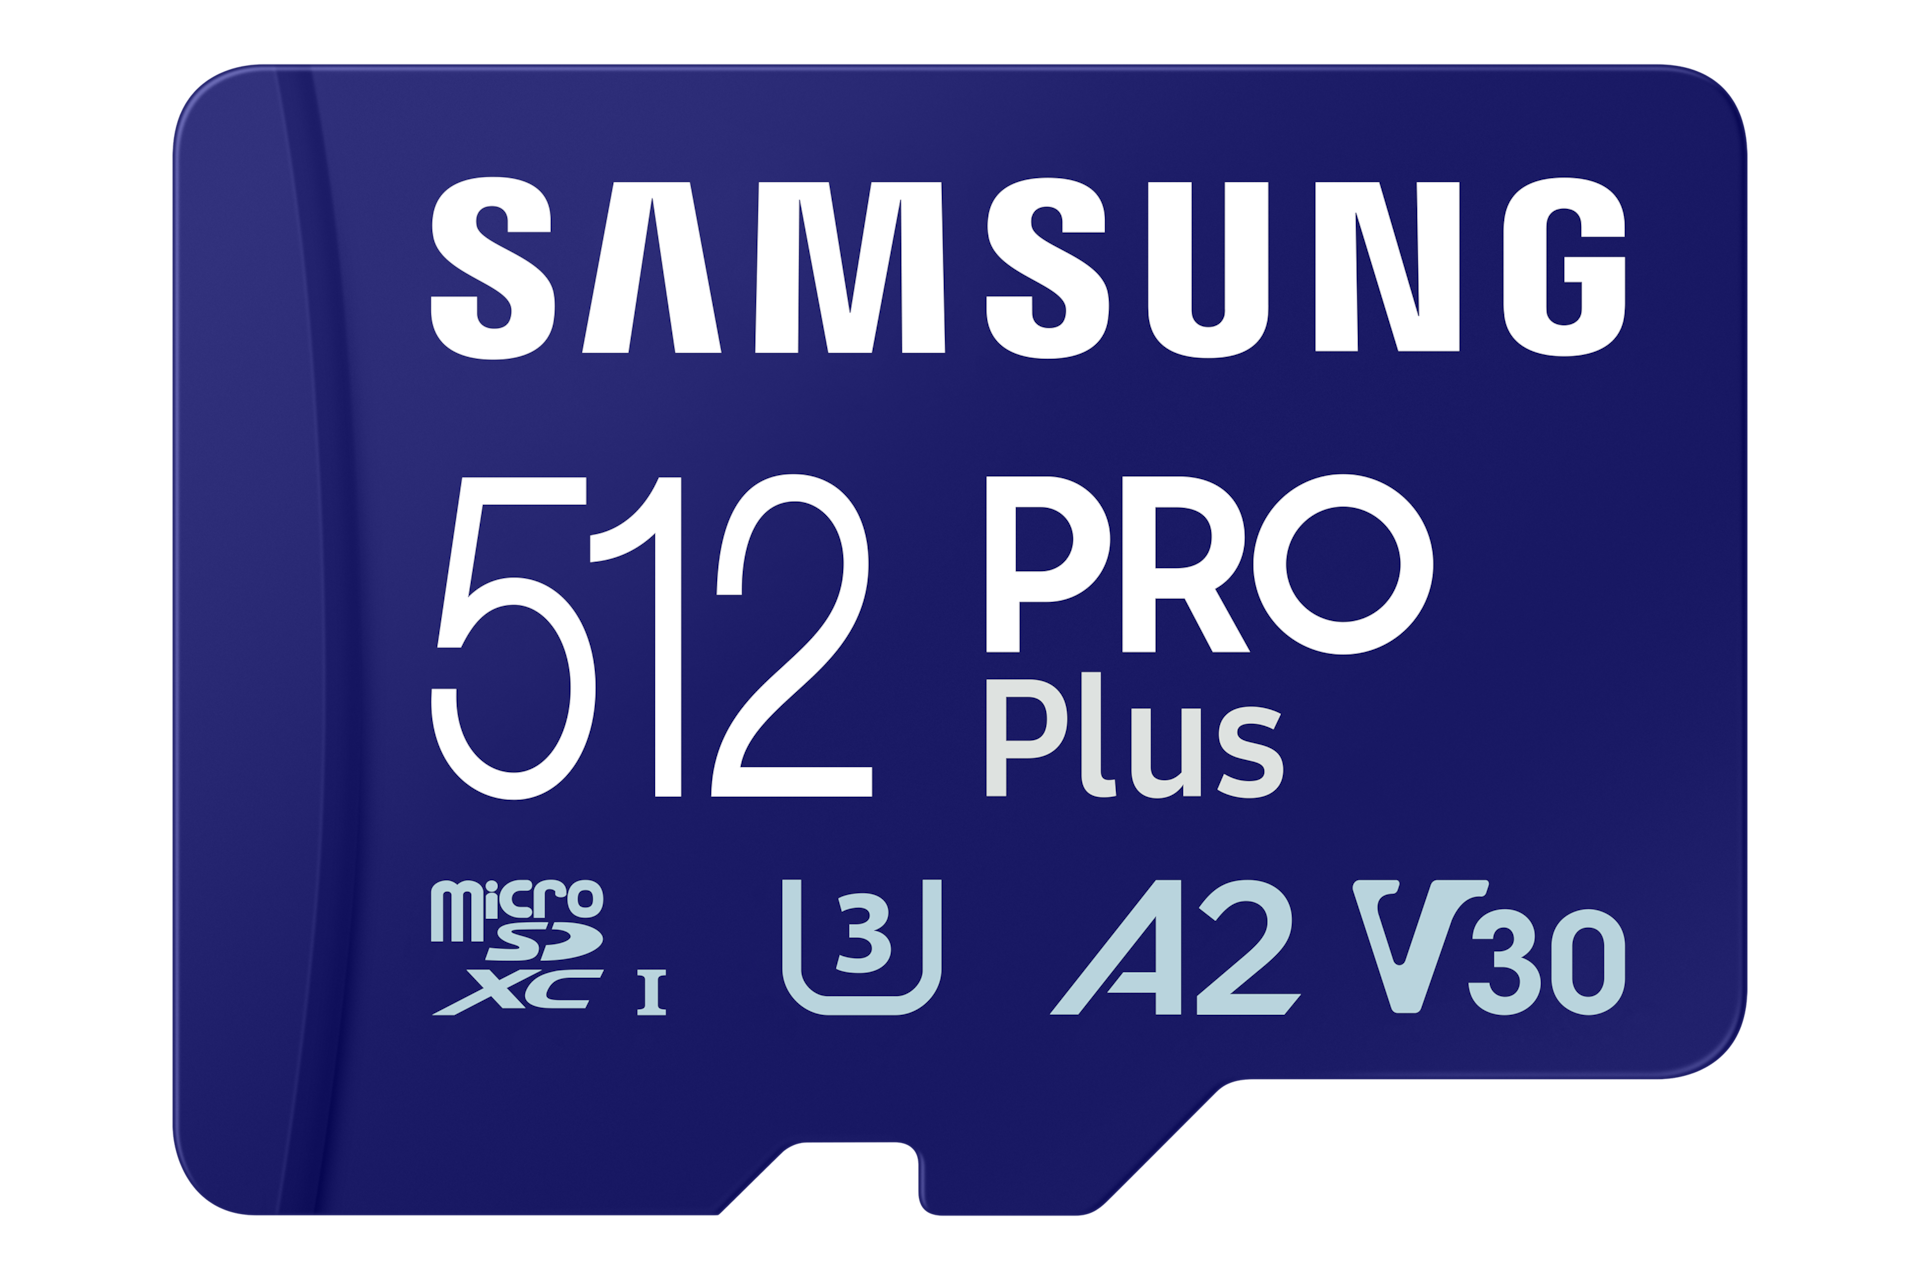 PROFESSIONAL HIGH SPEED MICRO SD CARD 180MB/S MICROSDXC V30 UHS-I U3